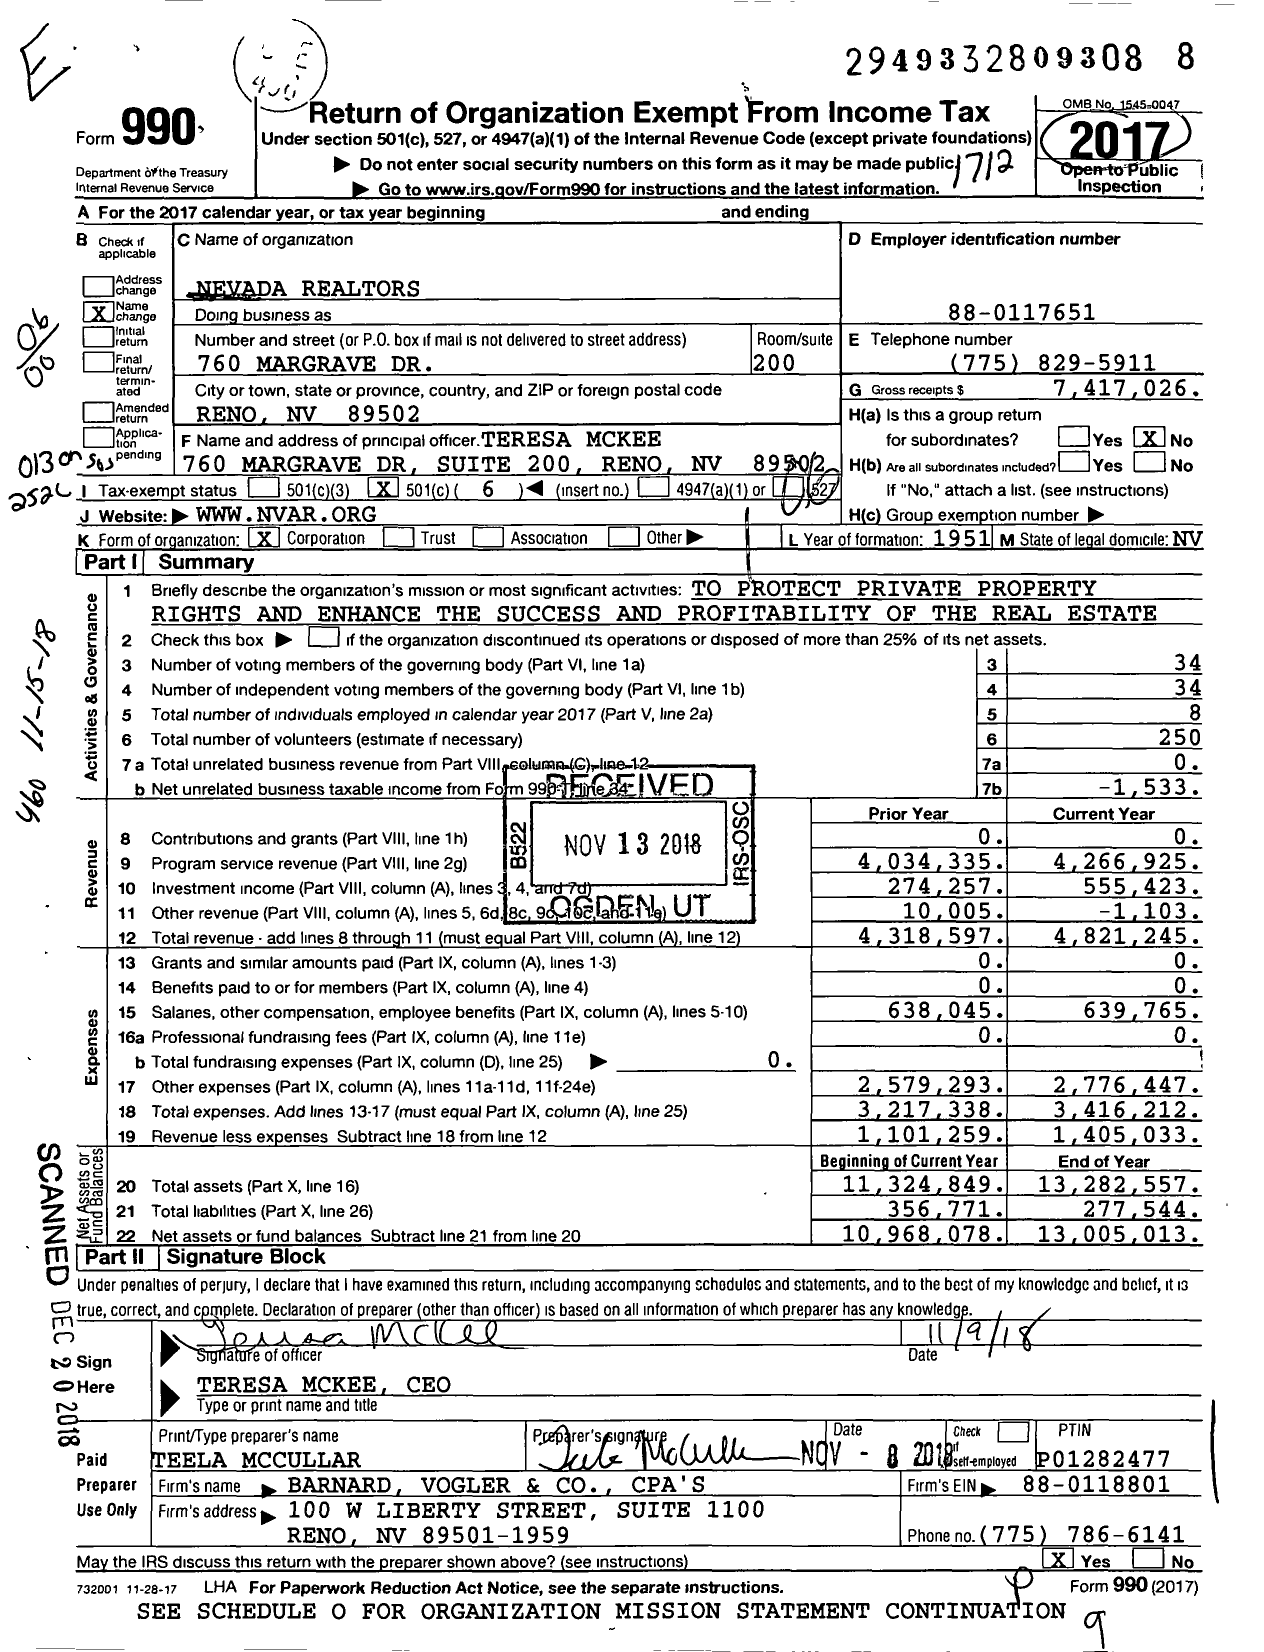 Image of first page of 2017 Form 990O for Nevada Realtors (NVAR)